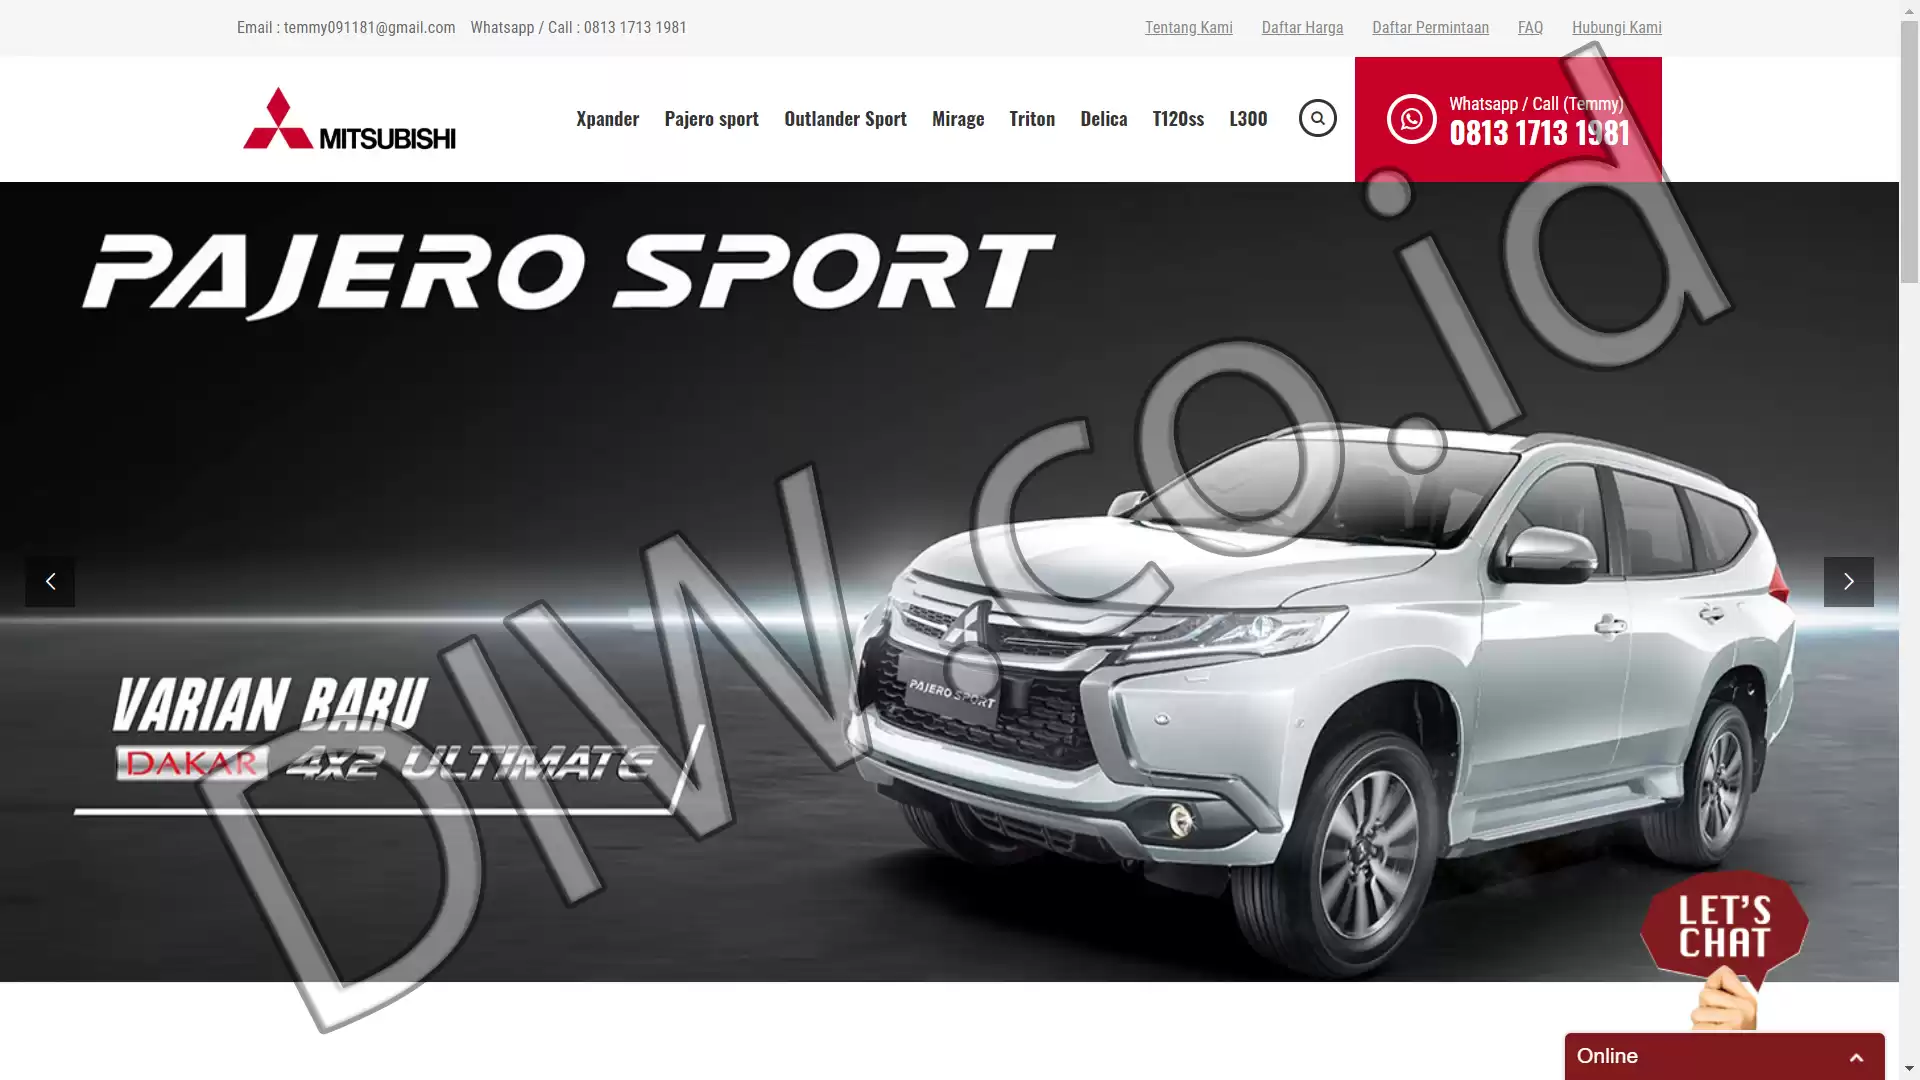 Portfolio - Dealer Mitsubishi Jakarta Barat - DIW.co.id (Digital In Website) Jasa Pembuatan Website dan Program Skripsi